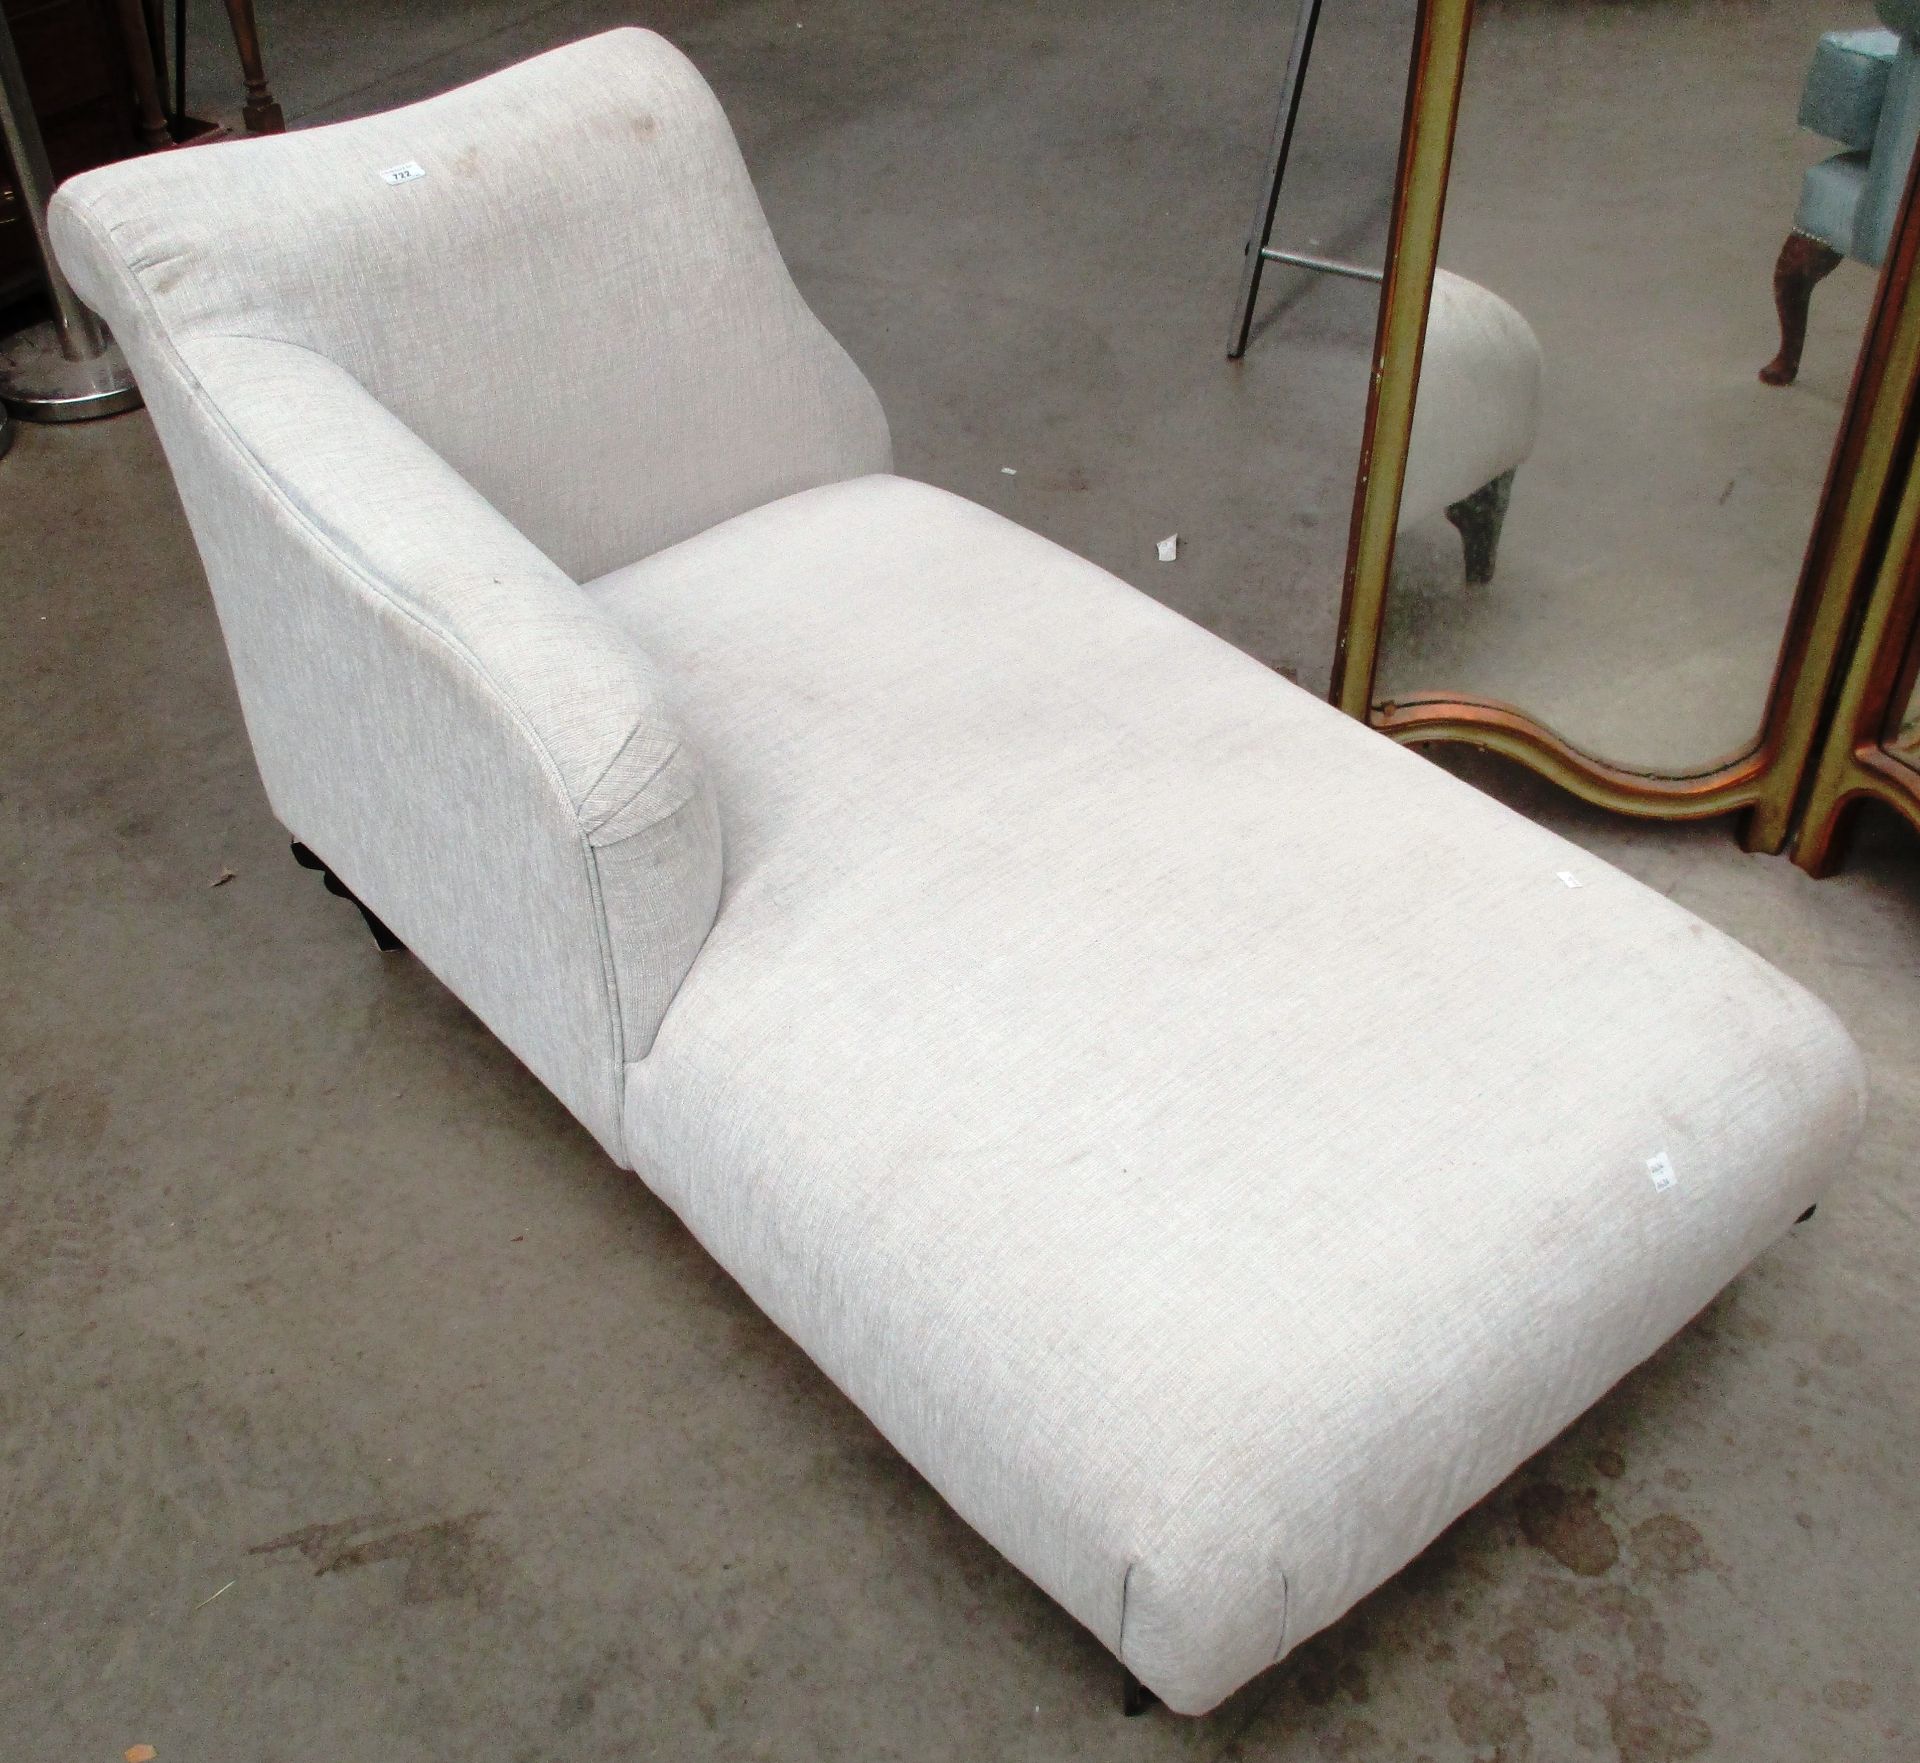 A mushroom upholstered chaise longue